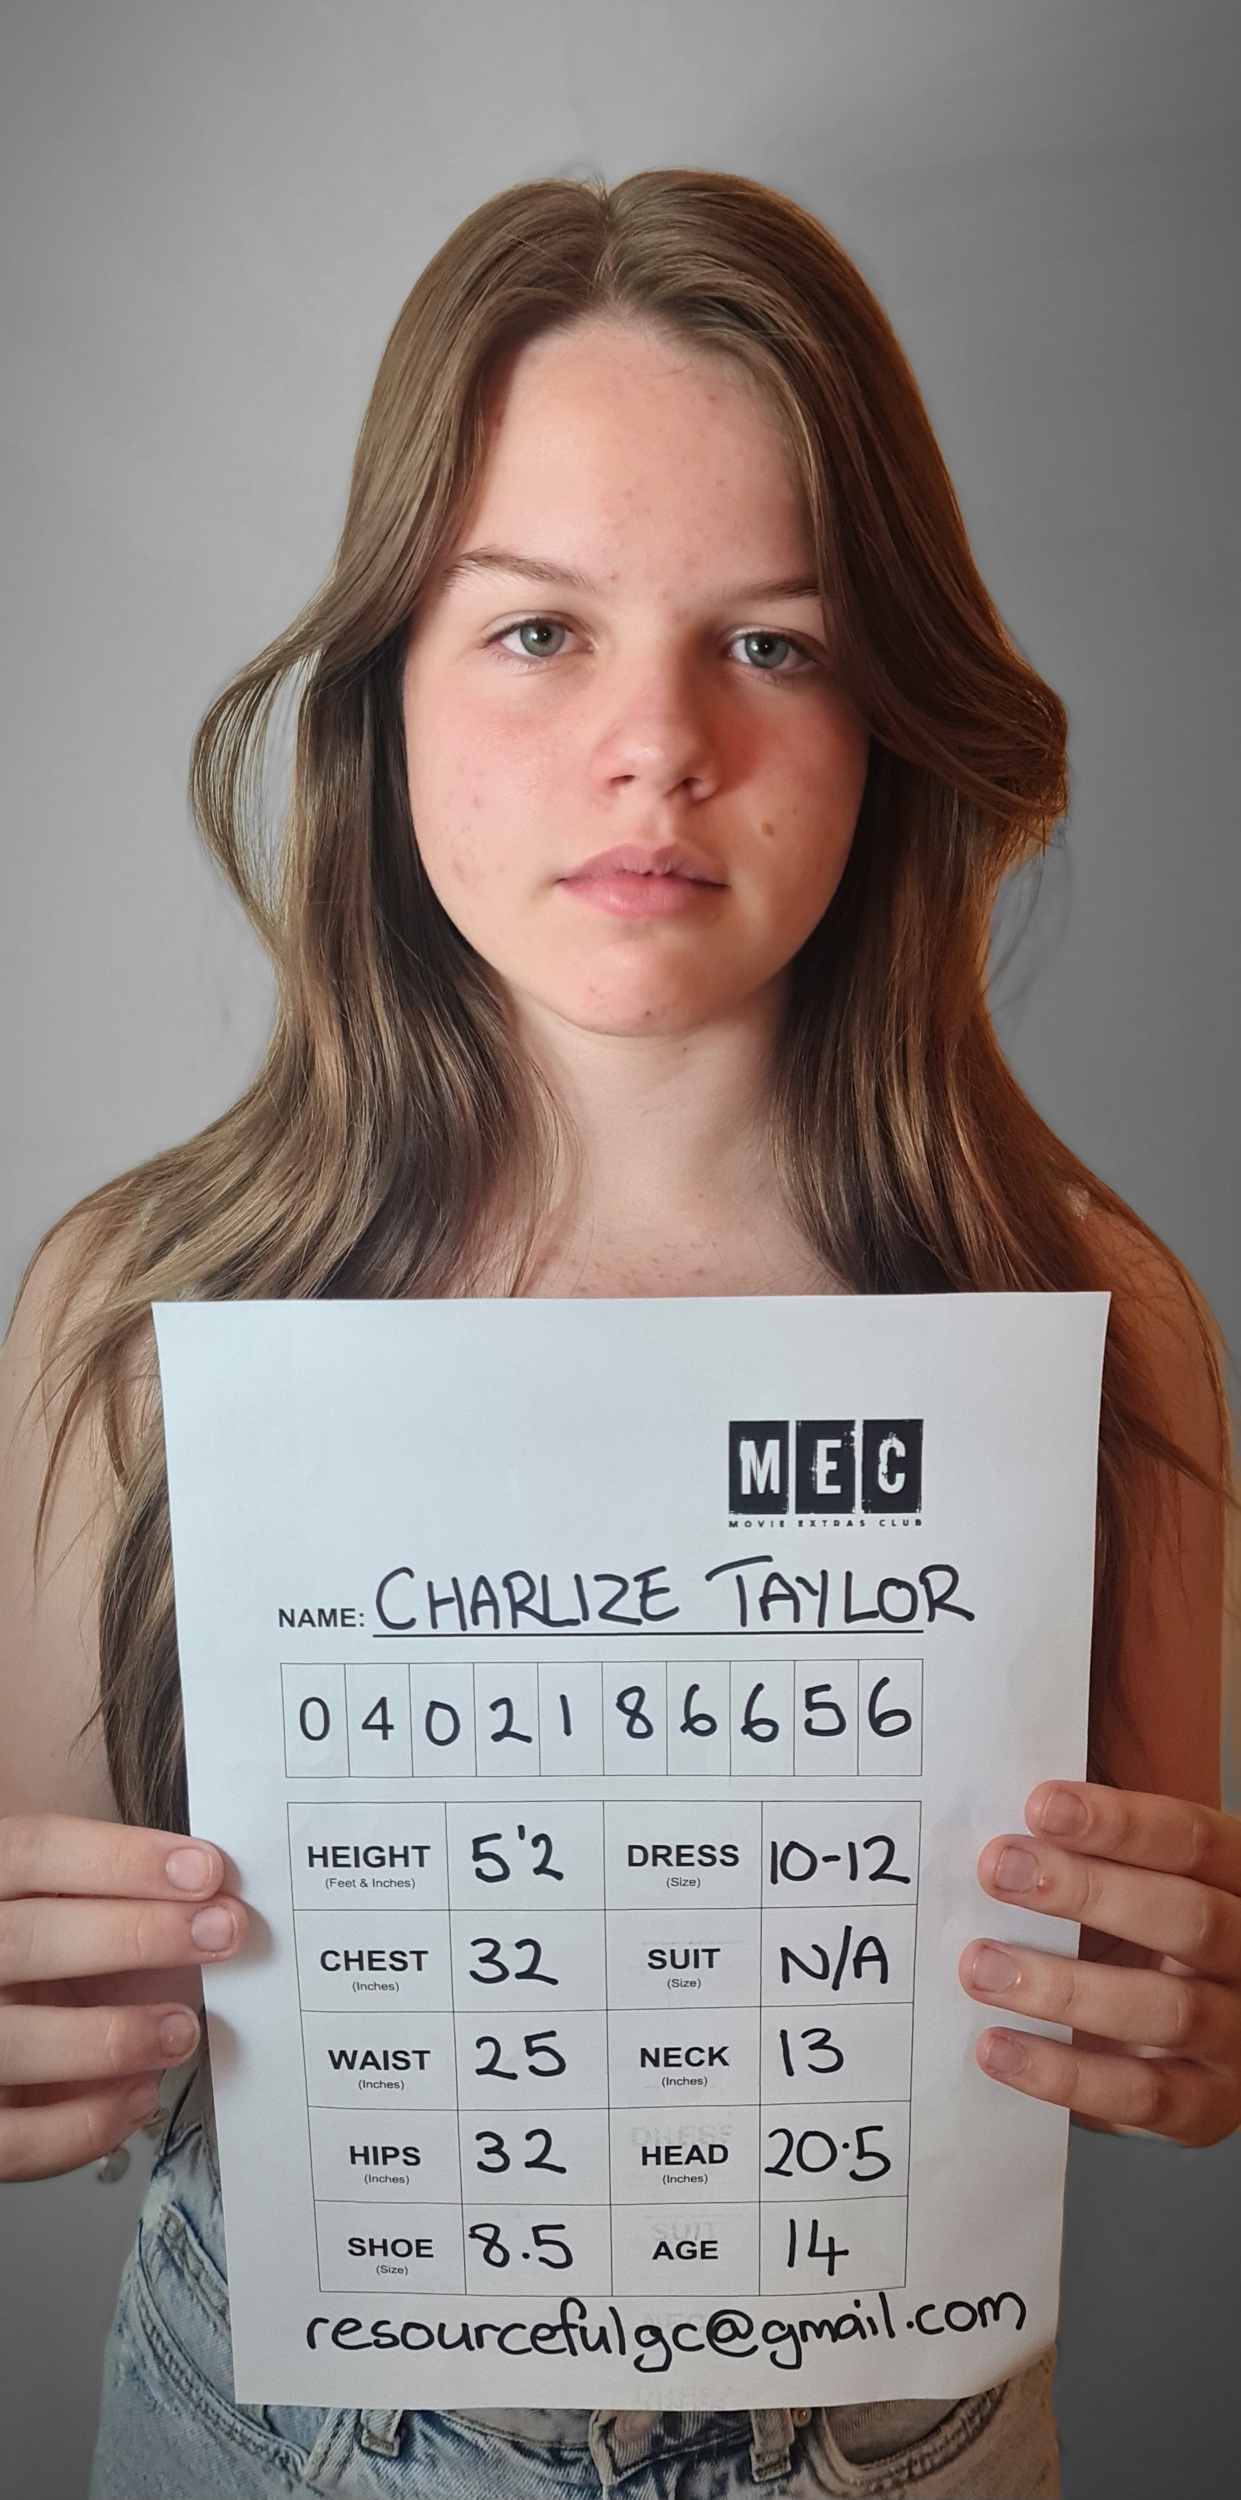 Charlize (Chili) Taylor